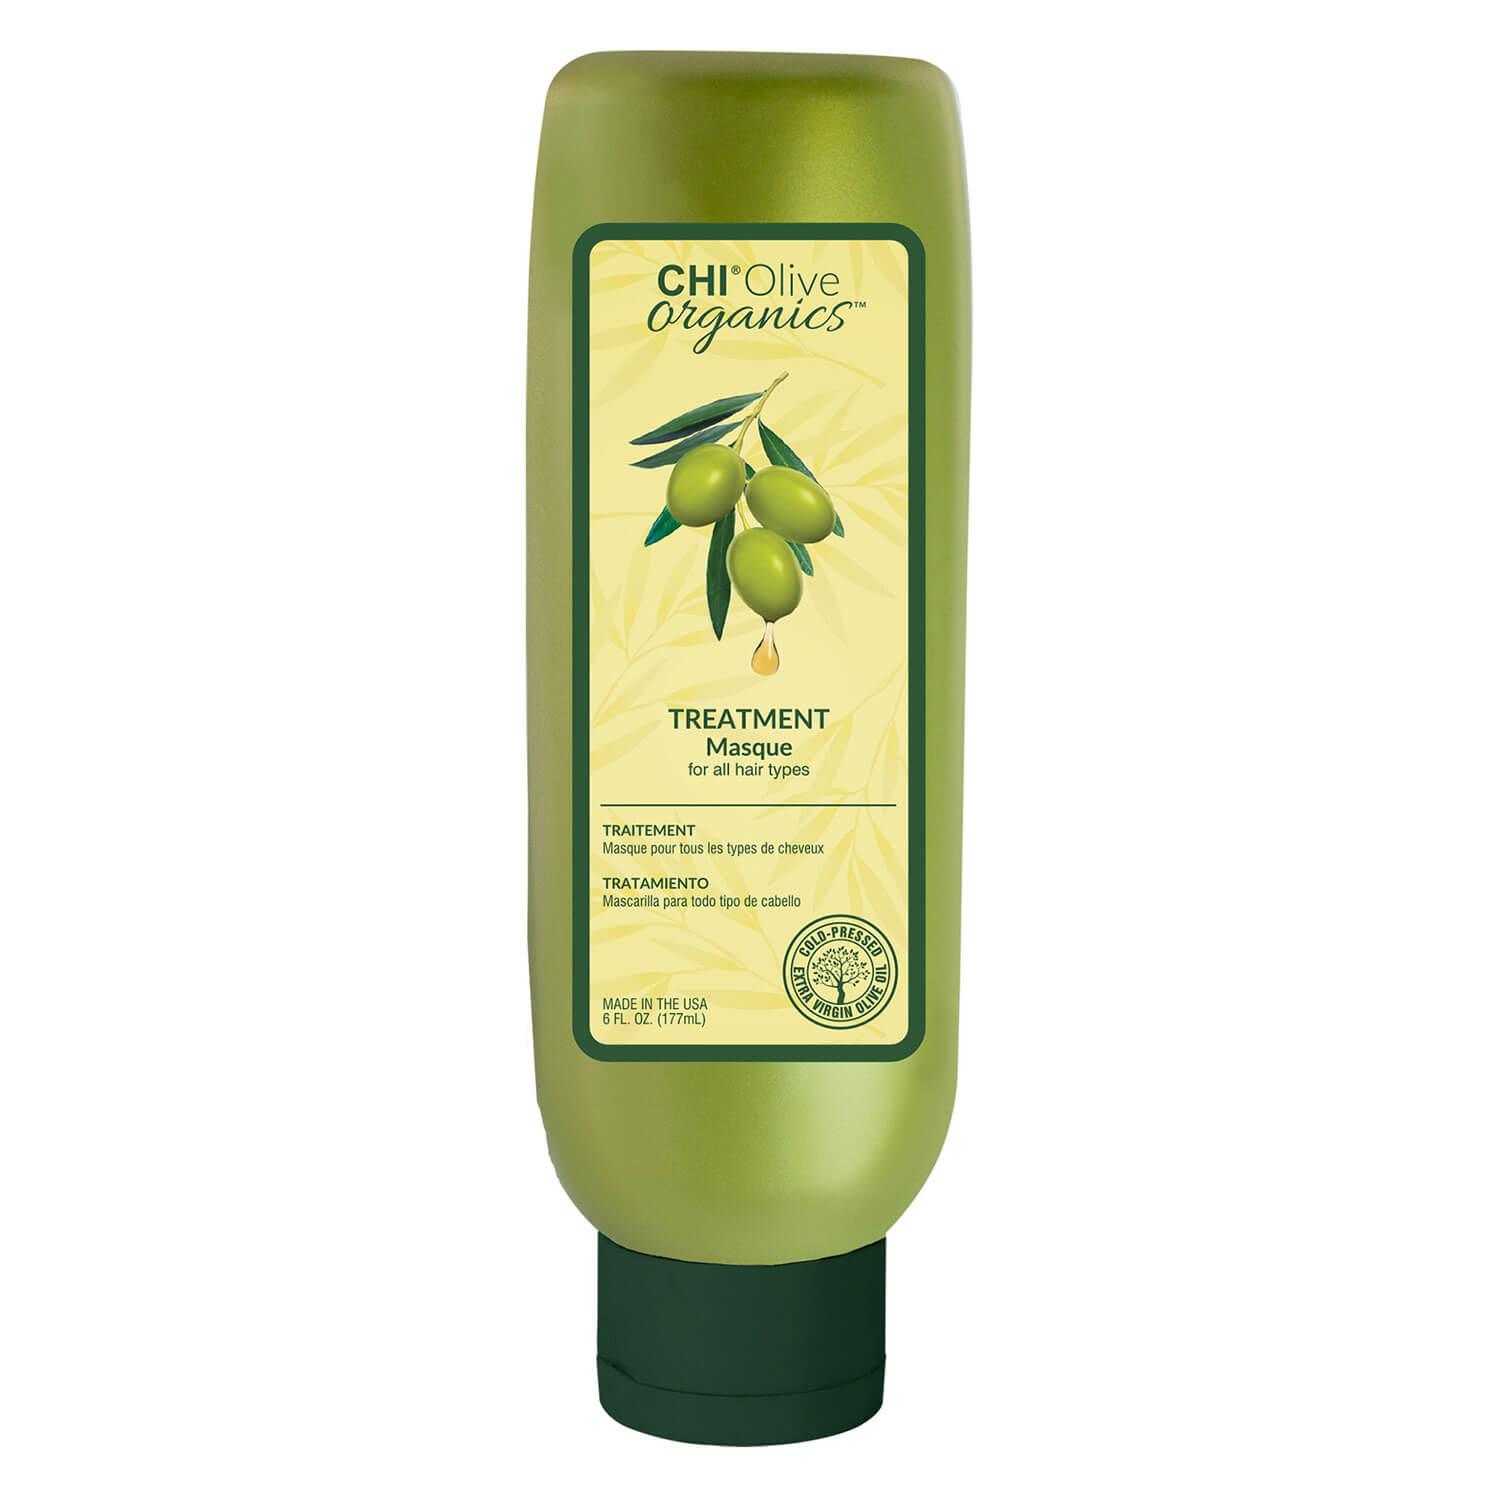 CHI Olive Organics - Treatment Masque